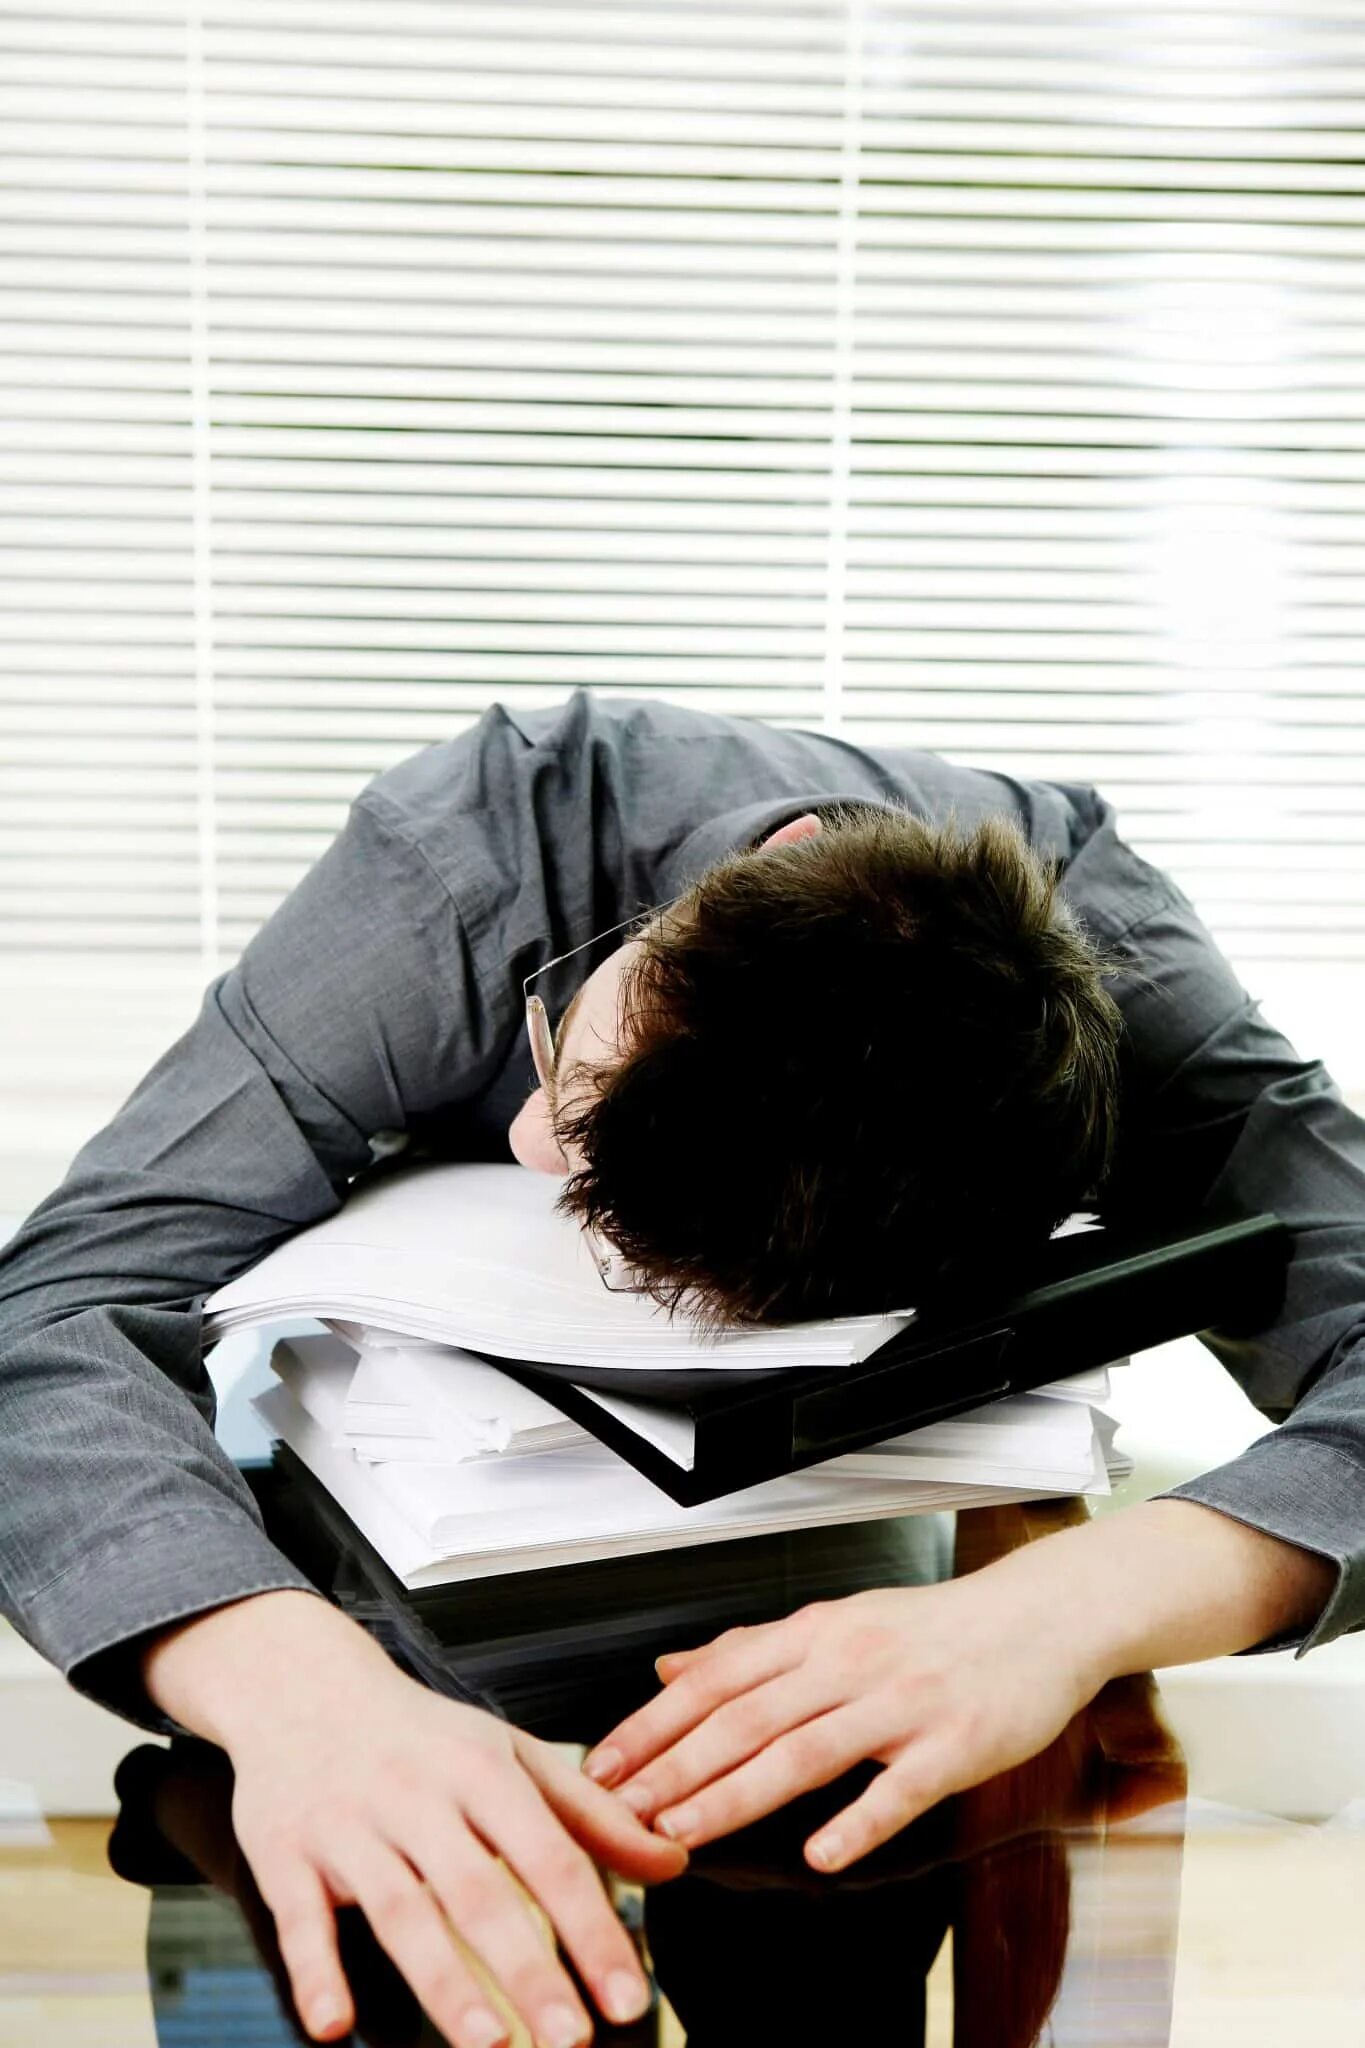 Lethargy. Exhaustion fatigue lethargy к ним прилагательные.